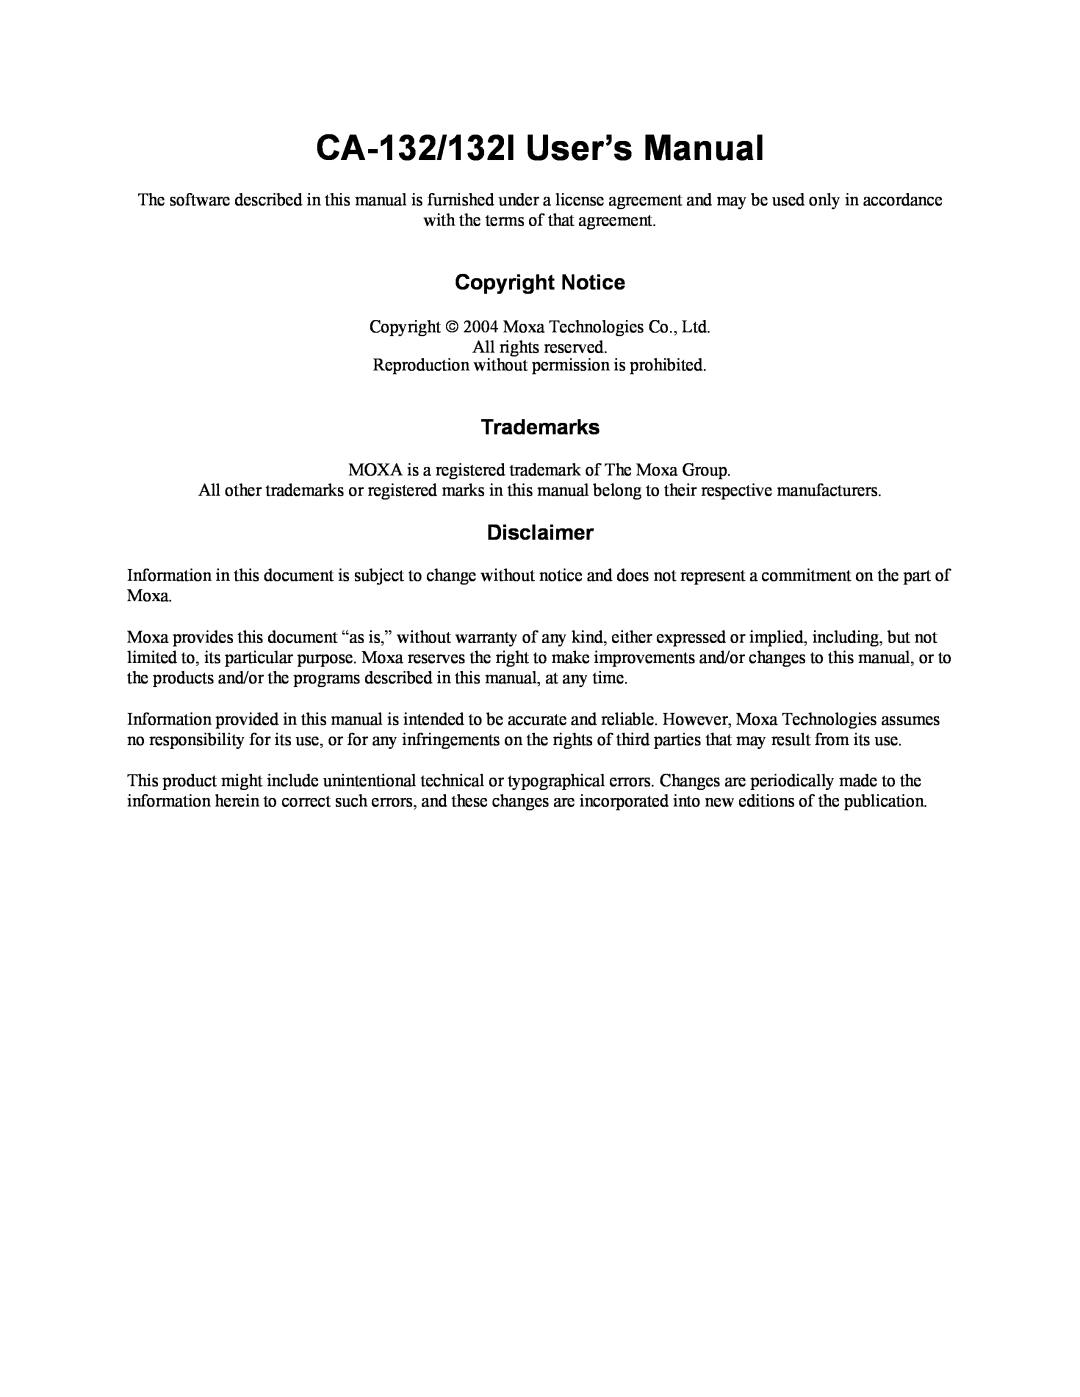 Moxa Technologies user manual Copyright Notice, Trademarks, Disclaimer, CA-132/132I User’s Manual 